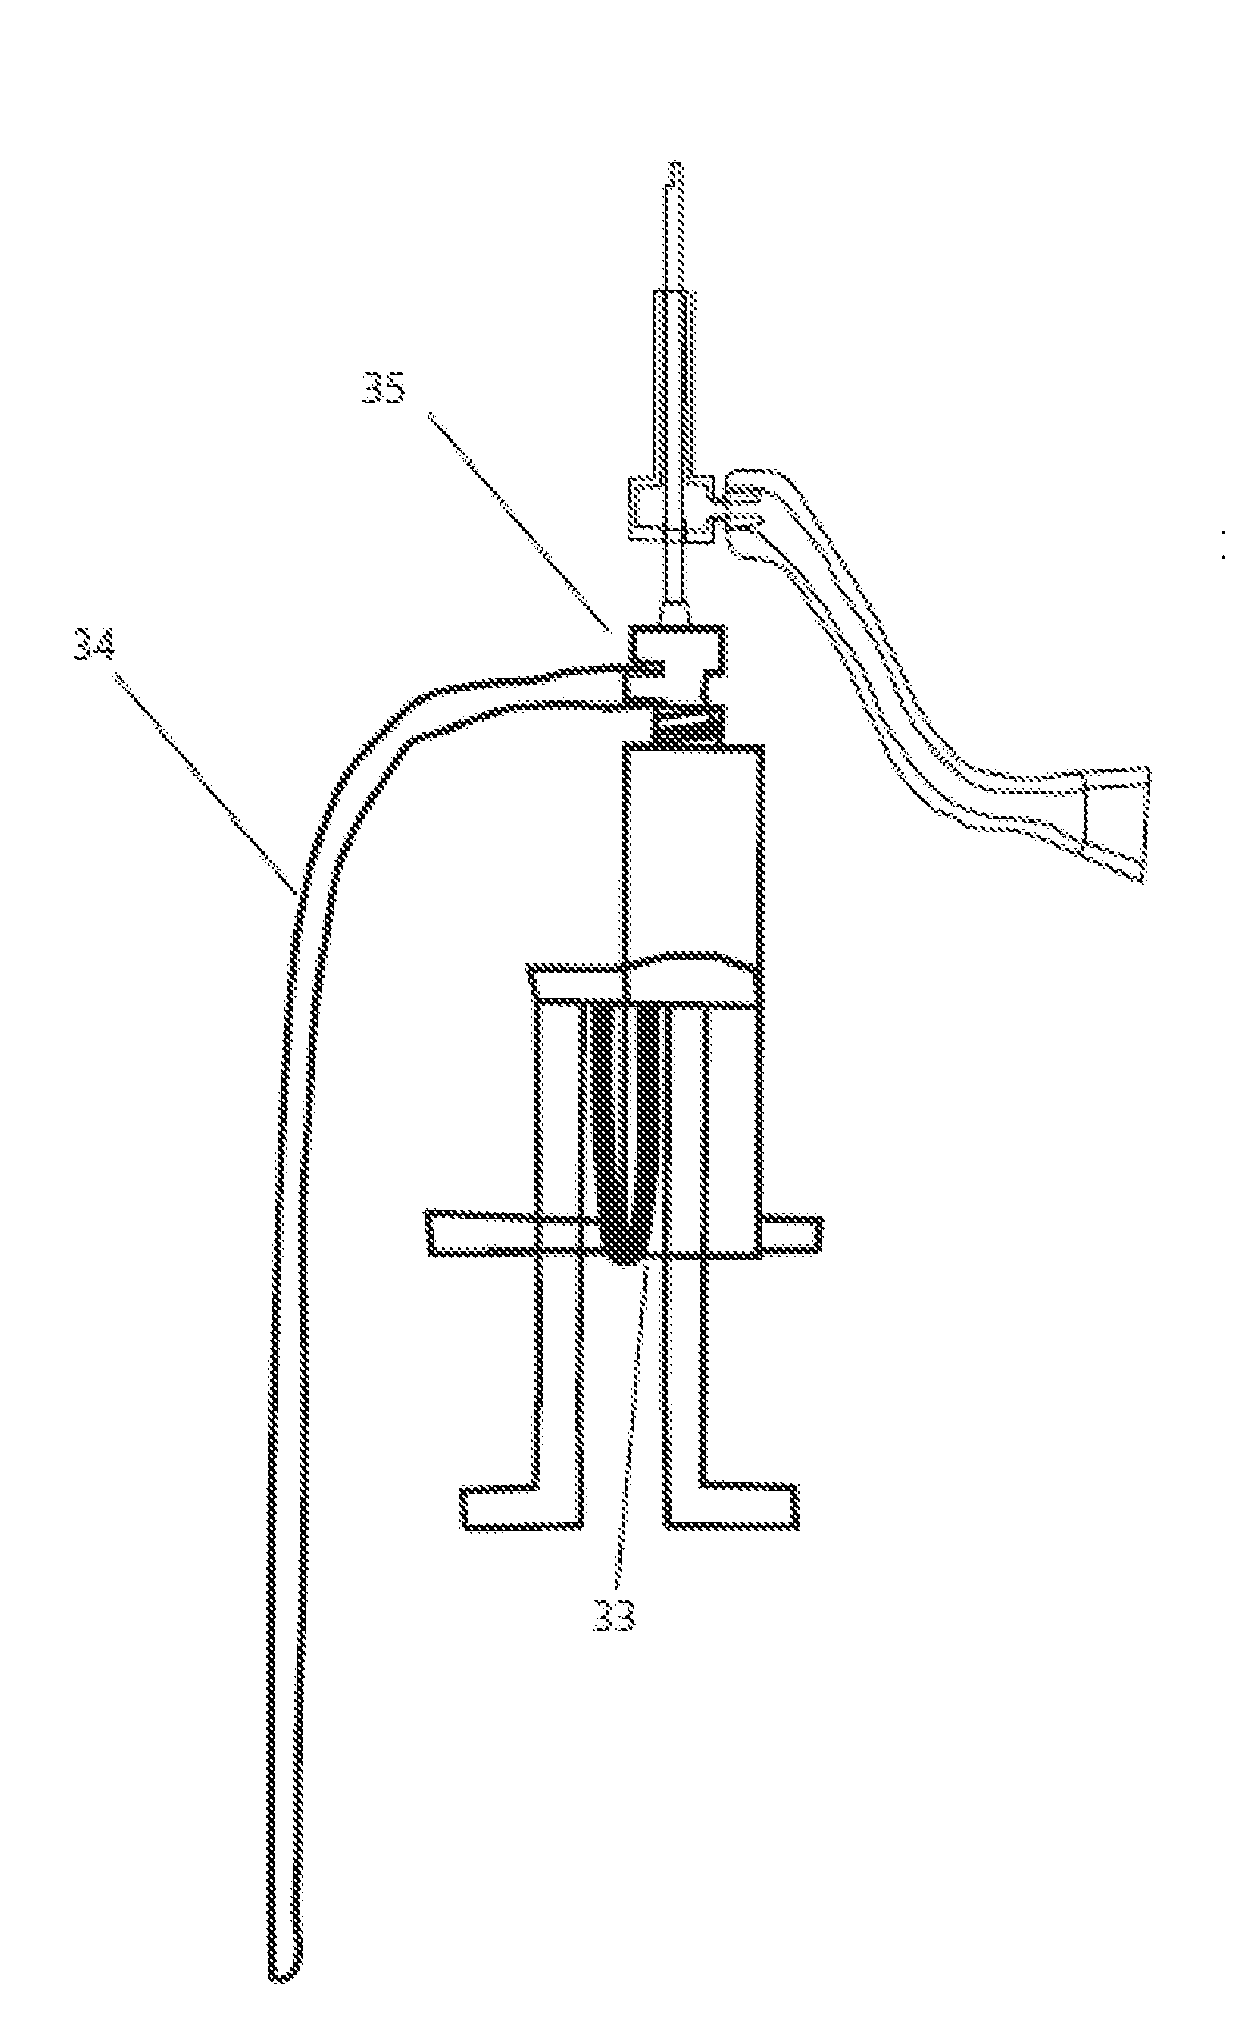 Irrigation and aspiration device